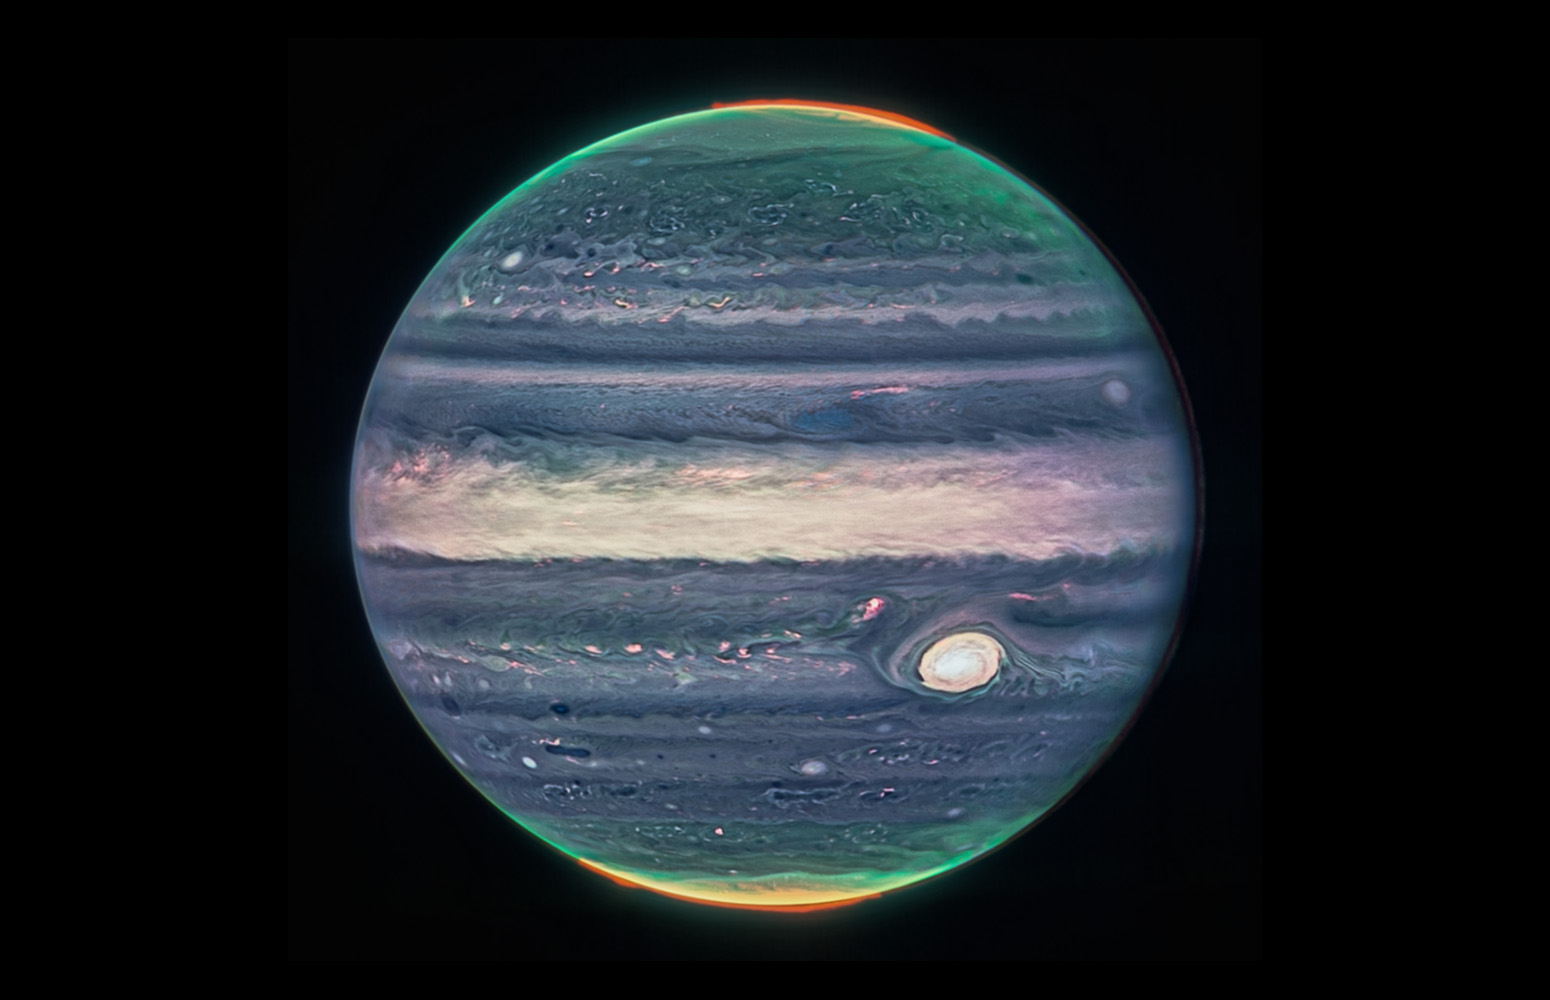 New jet stream discovered in Jupiter's upper atmosphere